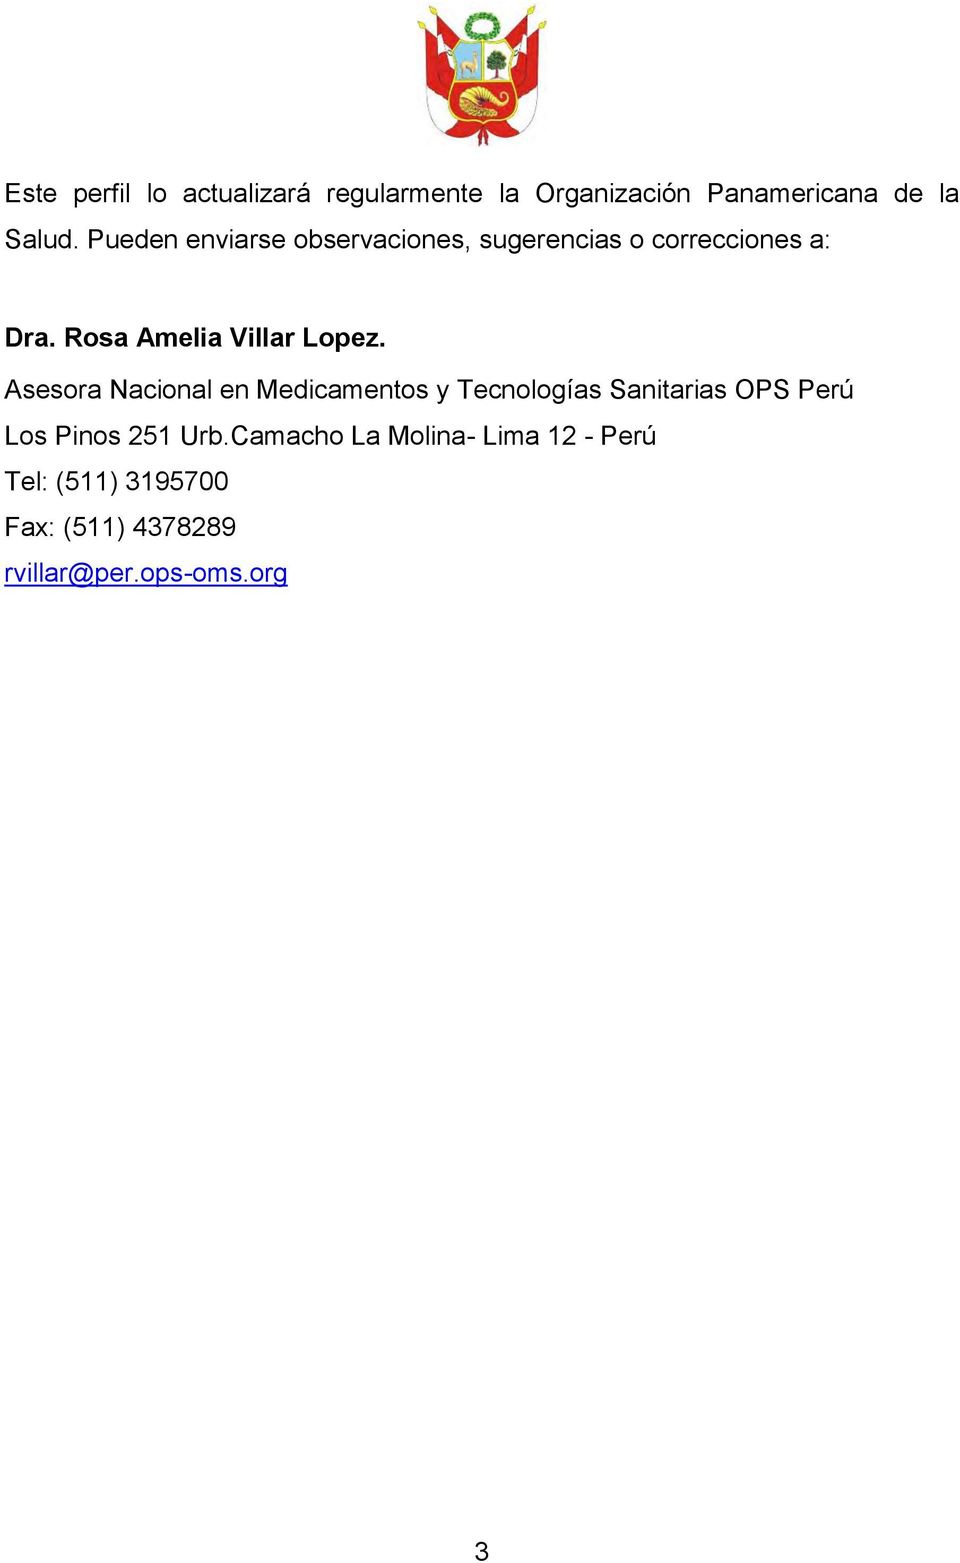 Rosa Amelia Villar Lopez.